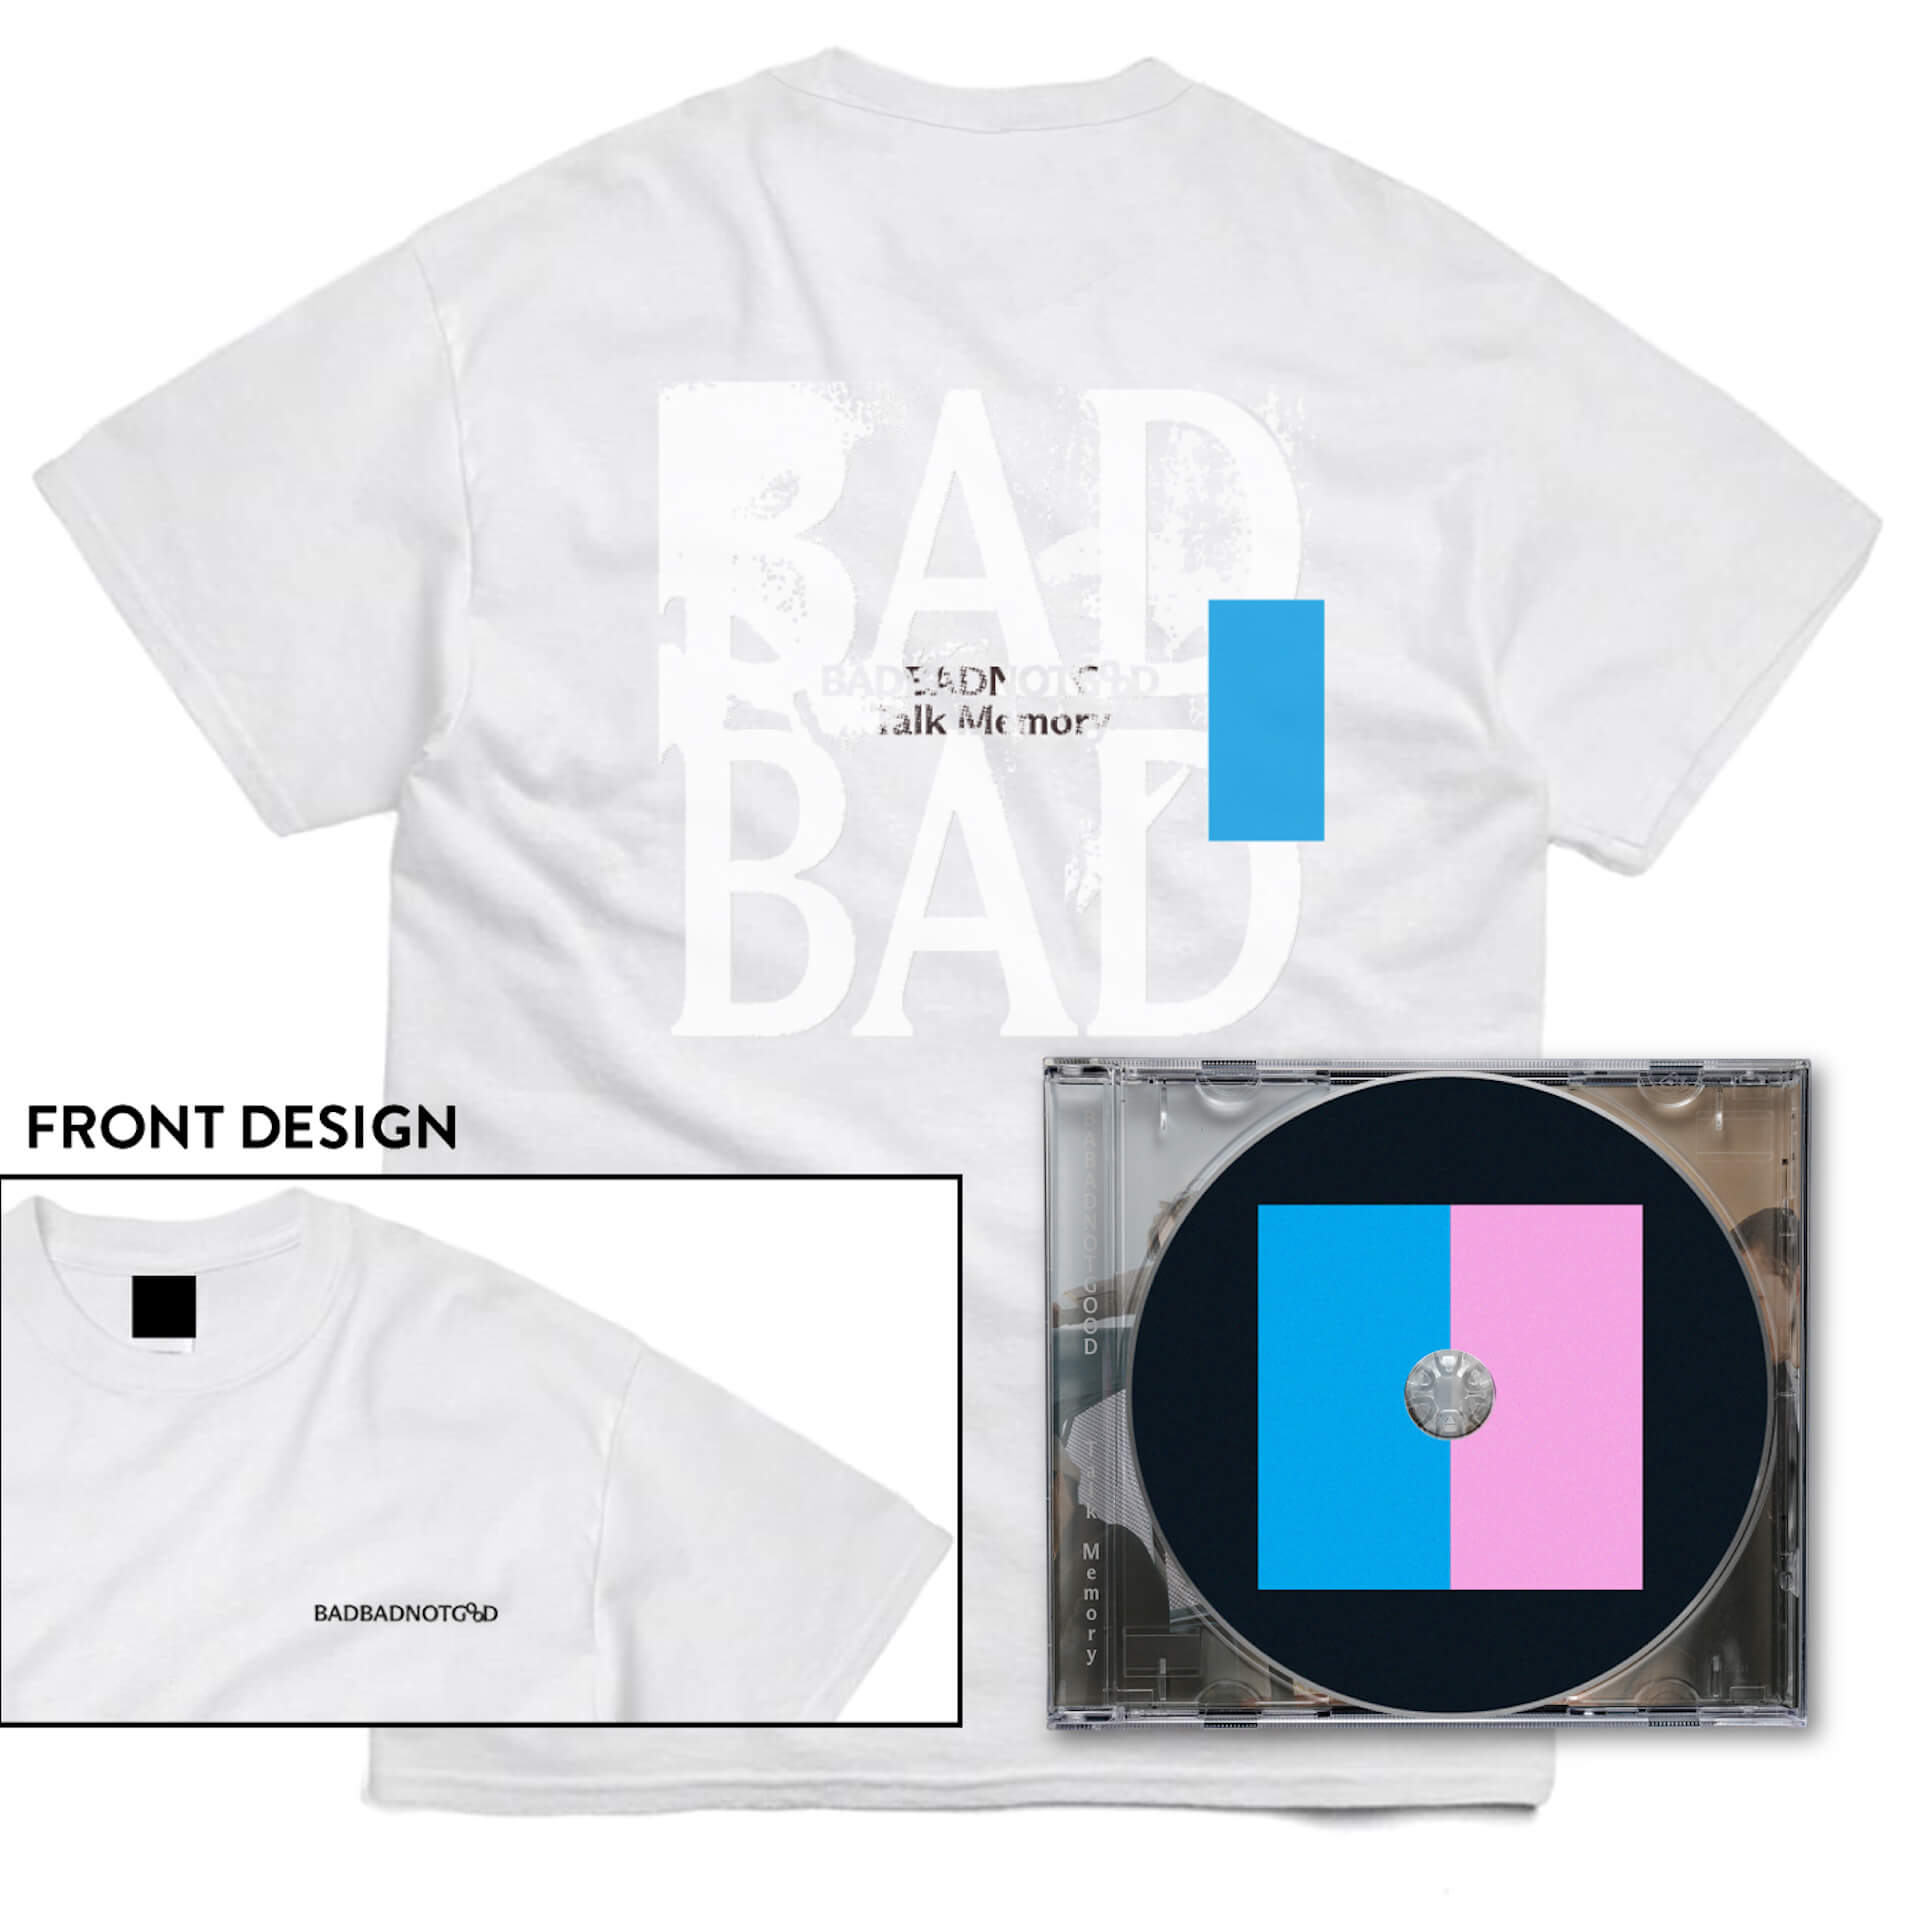 BADBADNOTGOODの最新アルバム『Talk Memory』のTシャツセットが日本限定で発売決定！ music210830_bbng_1